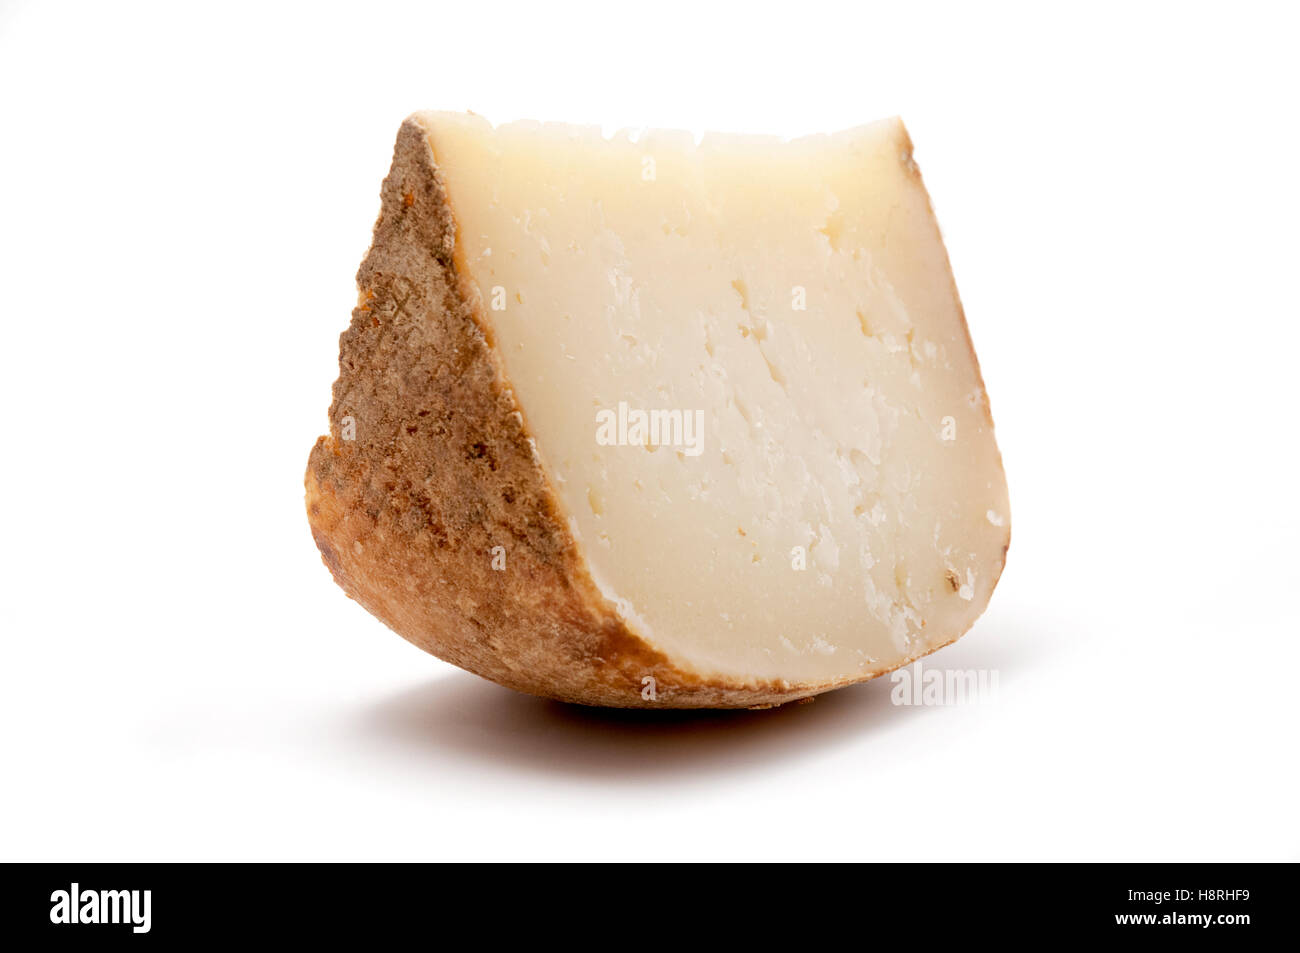 (Marzolino pecorino toscan) fromage sur un fond blanc Banque D'Images